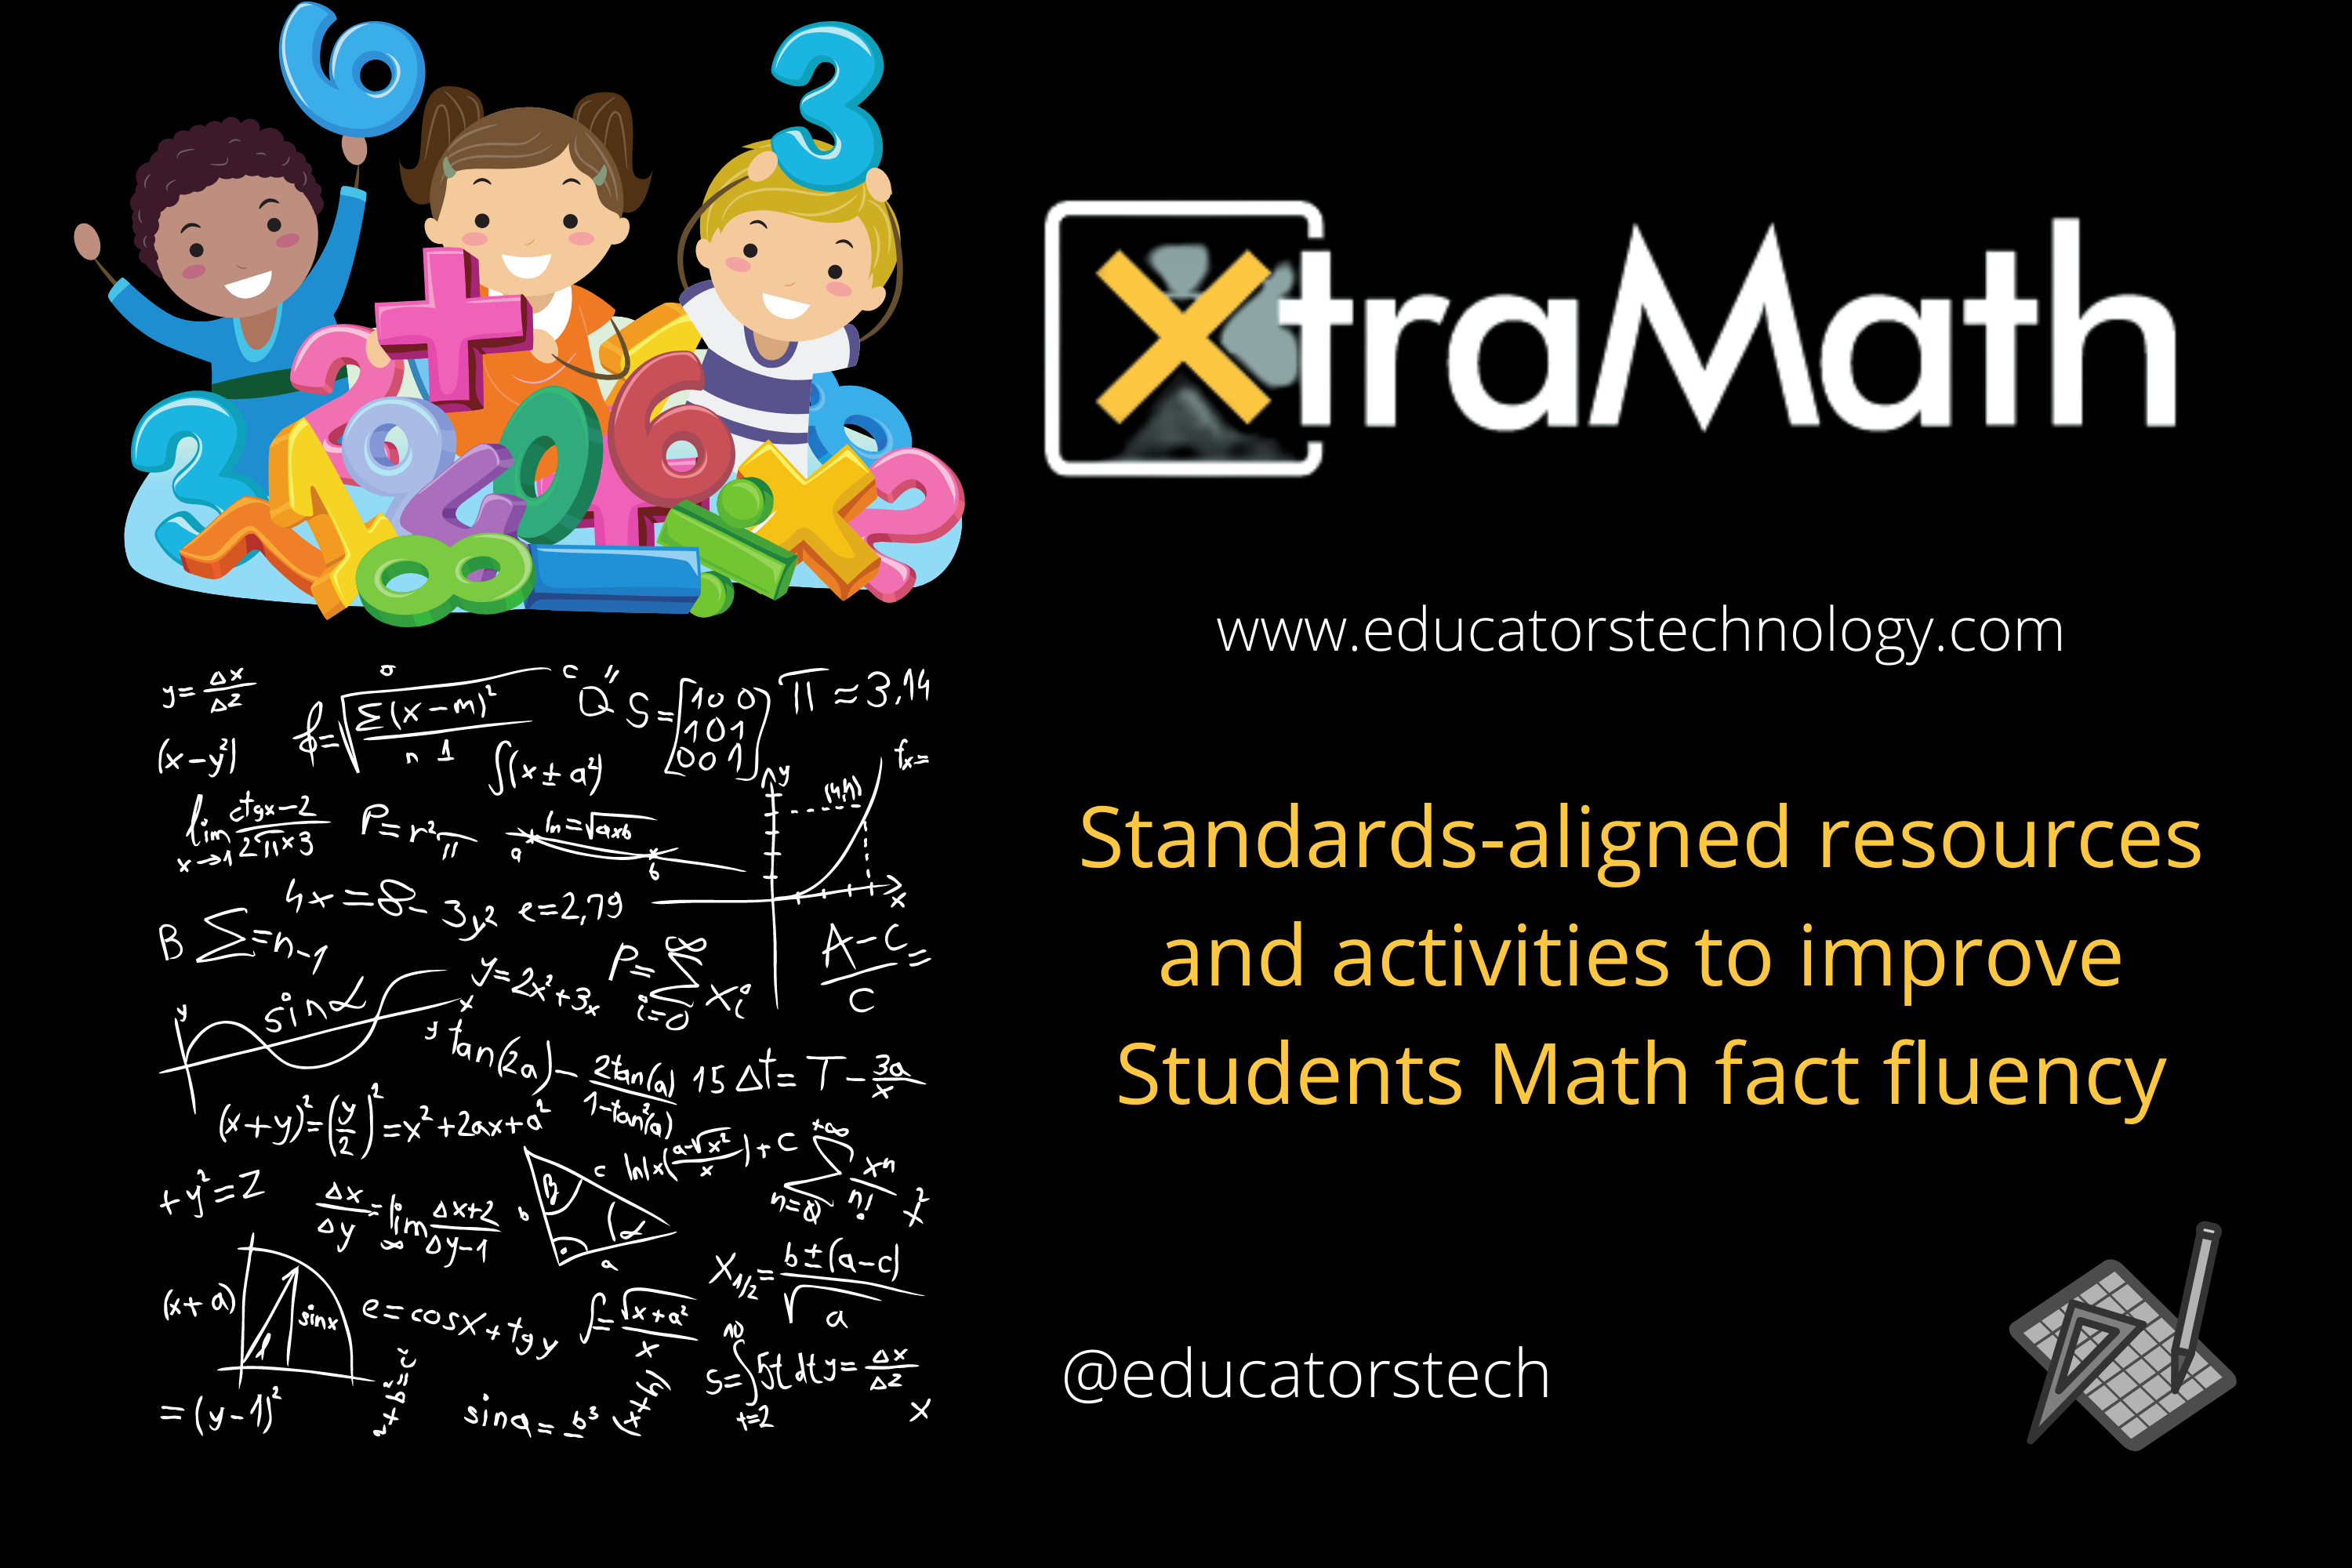 XtraMath Review for Educators